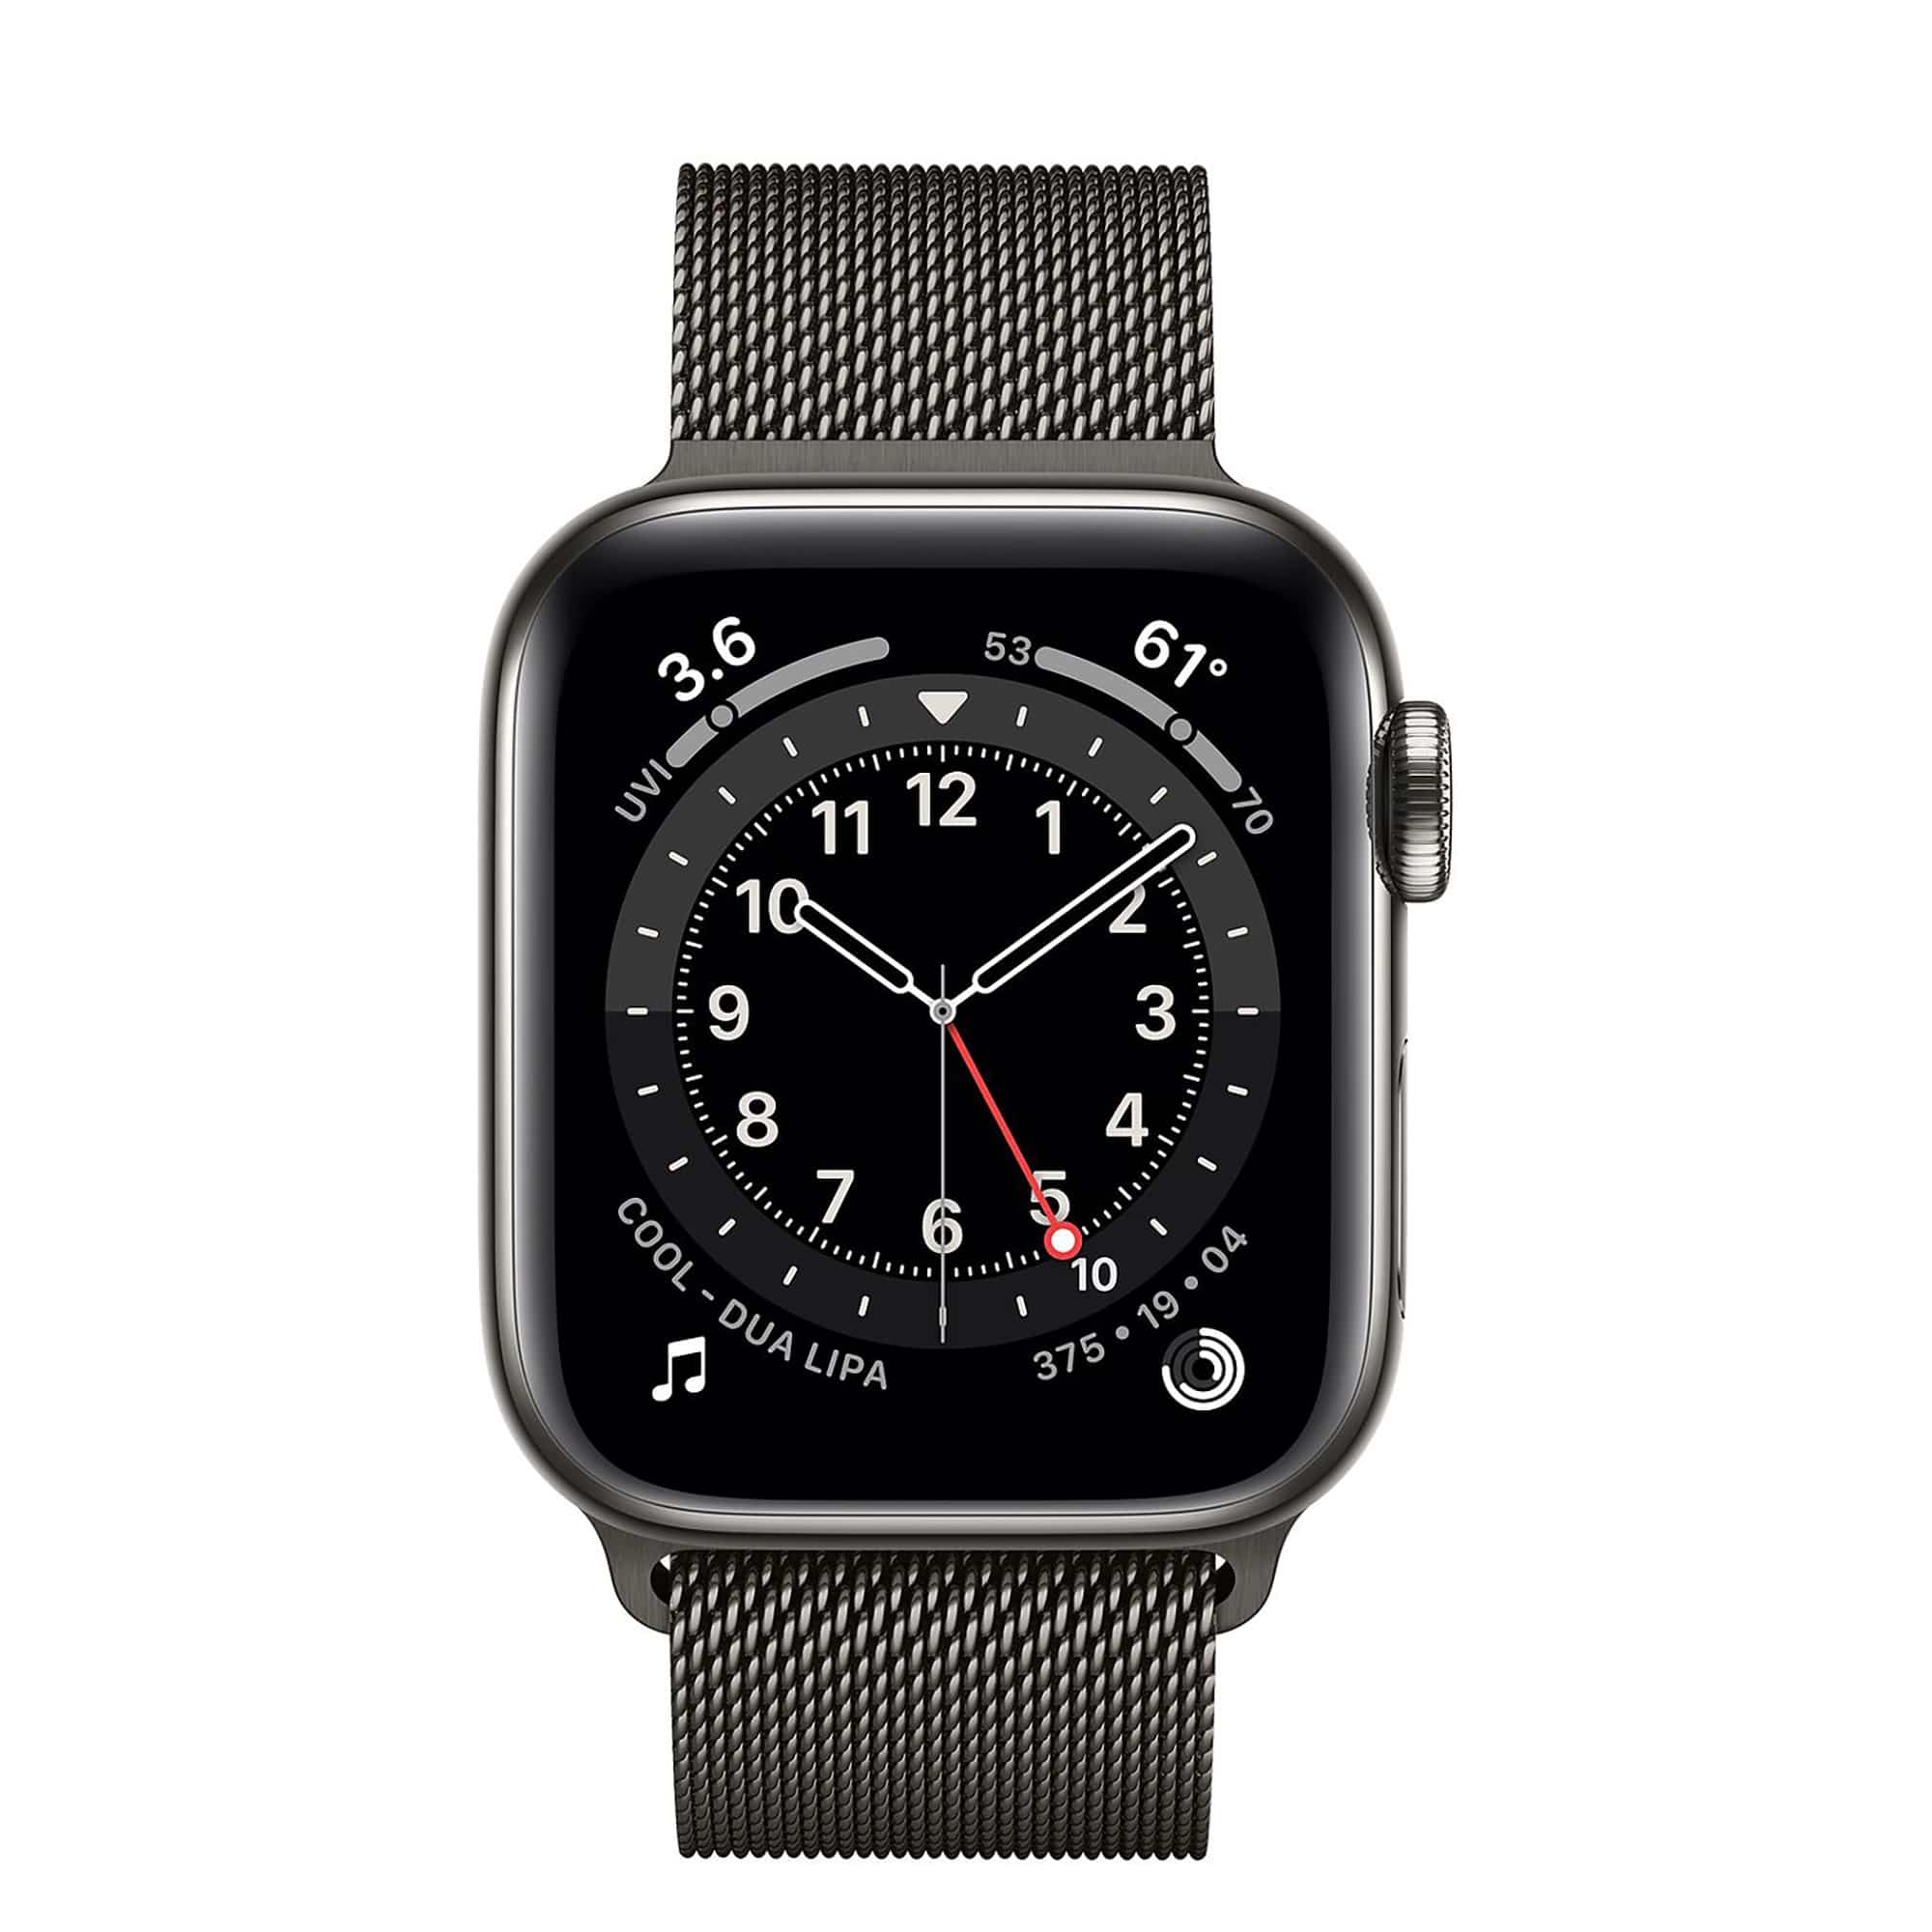 Apple Watch Series 6 Graphite Stainless Steel Case with Graphite Apple Watch Graphite Stainless Steel